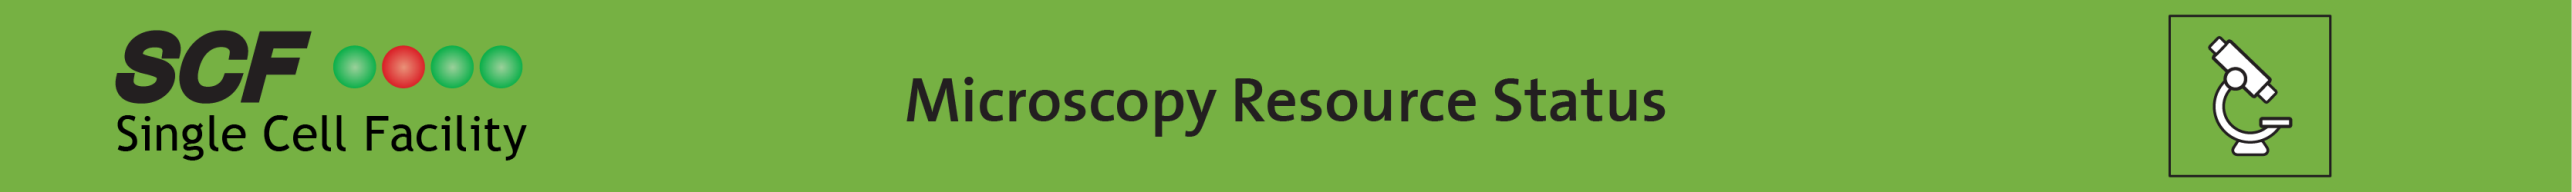 Microscopy resource status banner